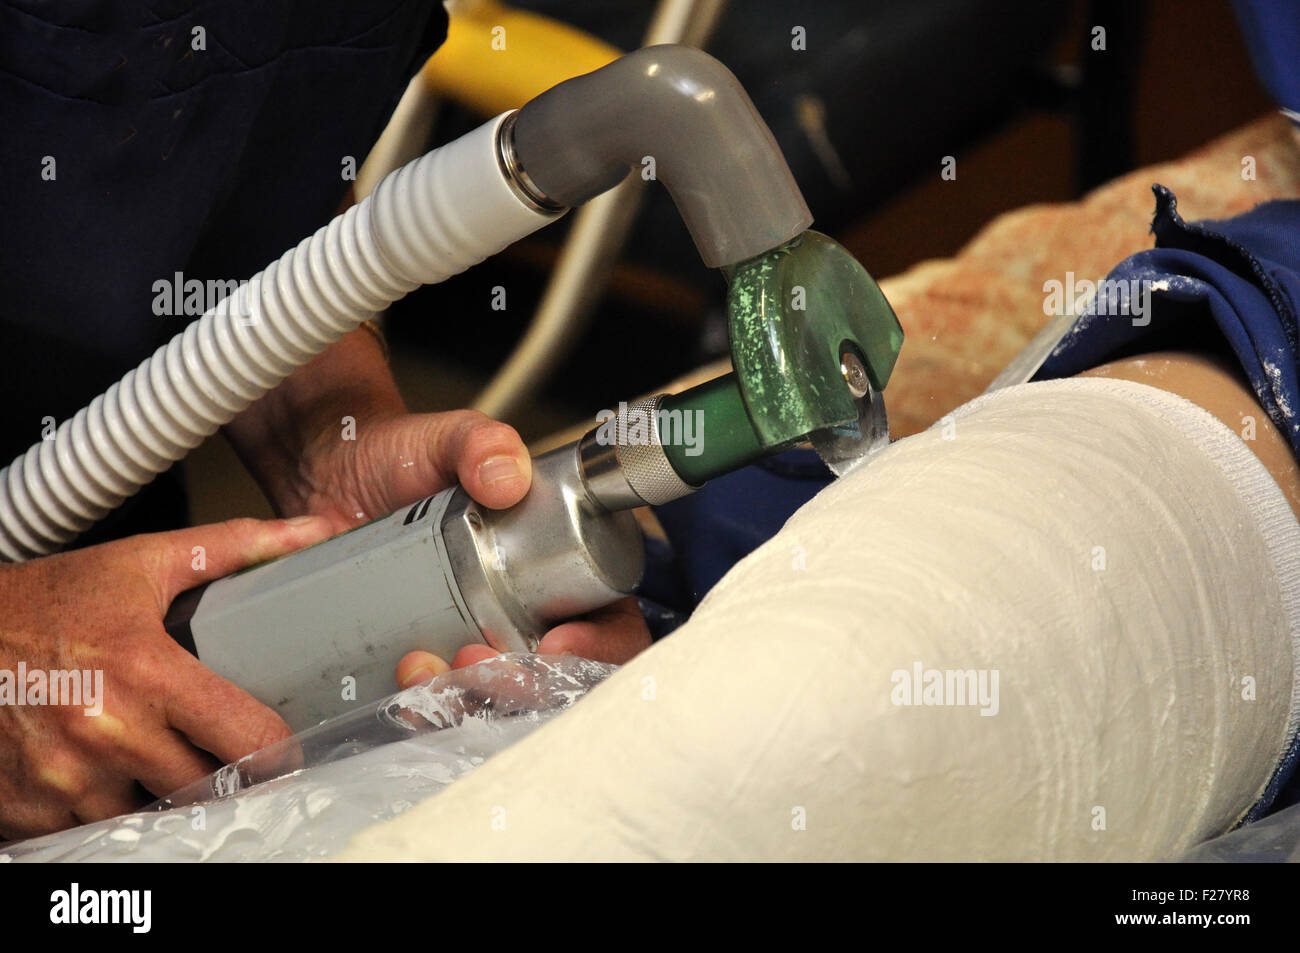 a nurse cuts the plaster cast on a boy's broken leg Stock Photo